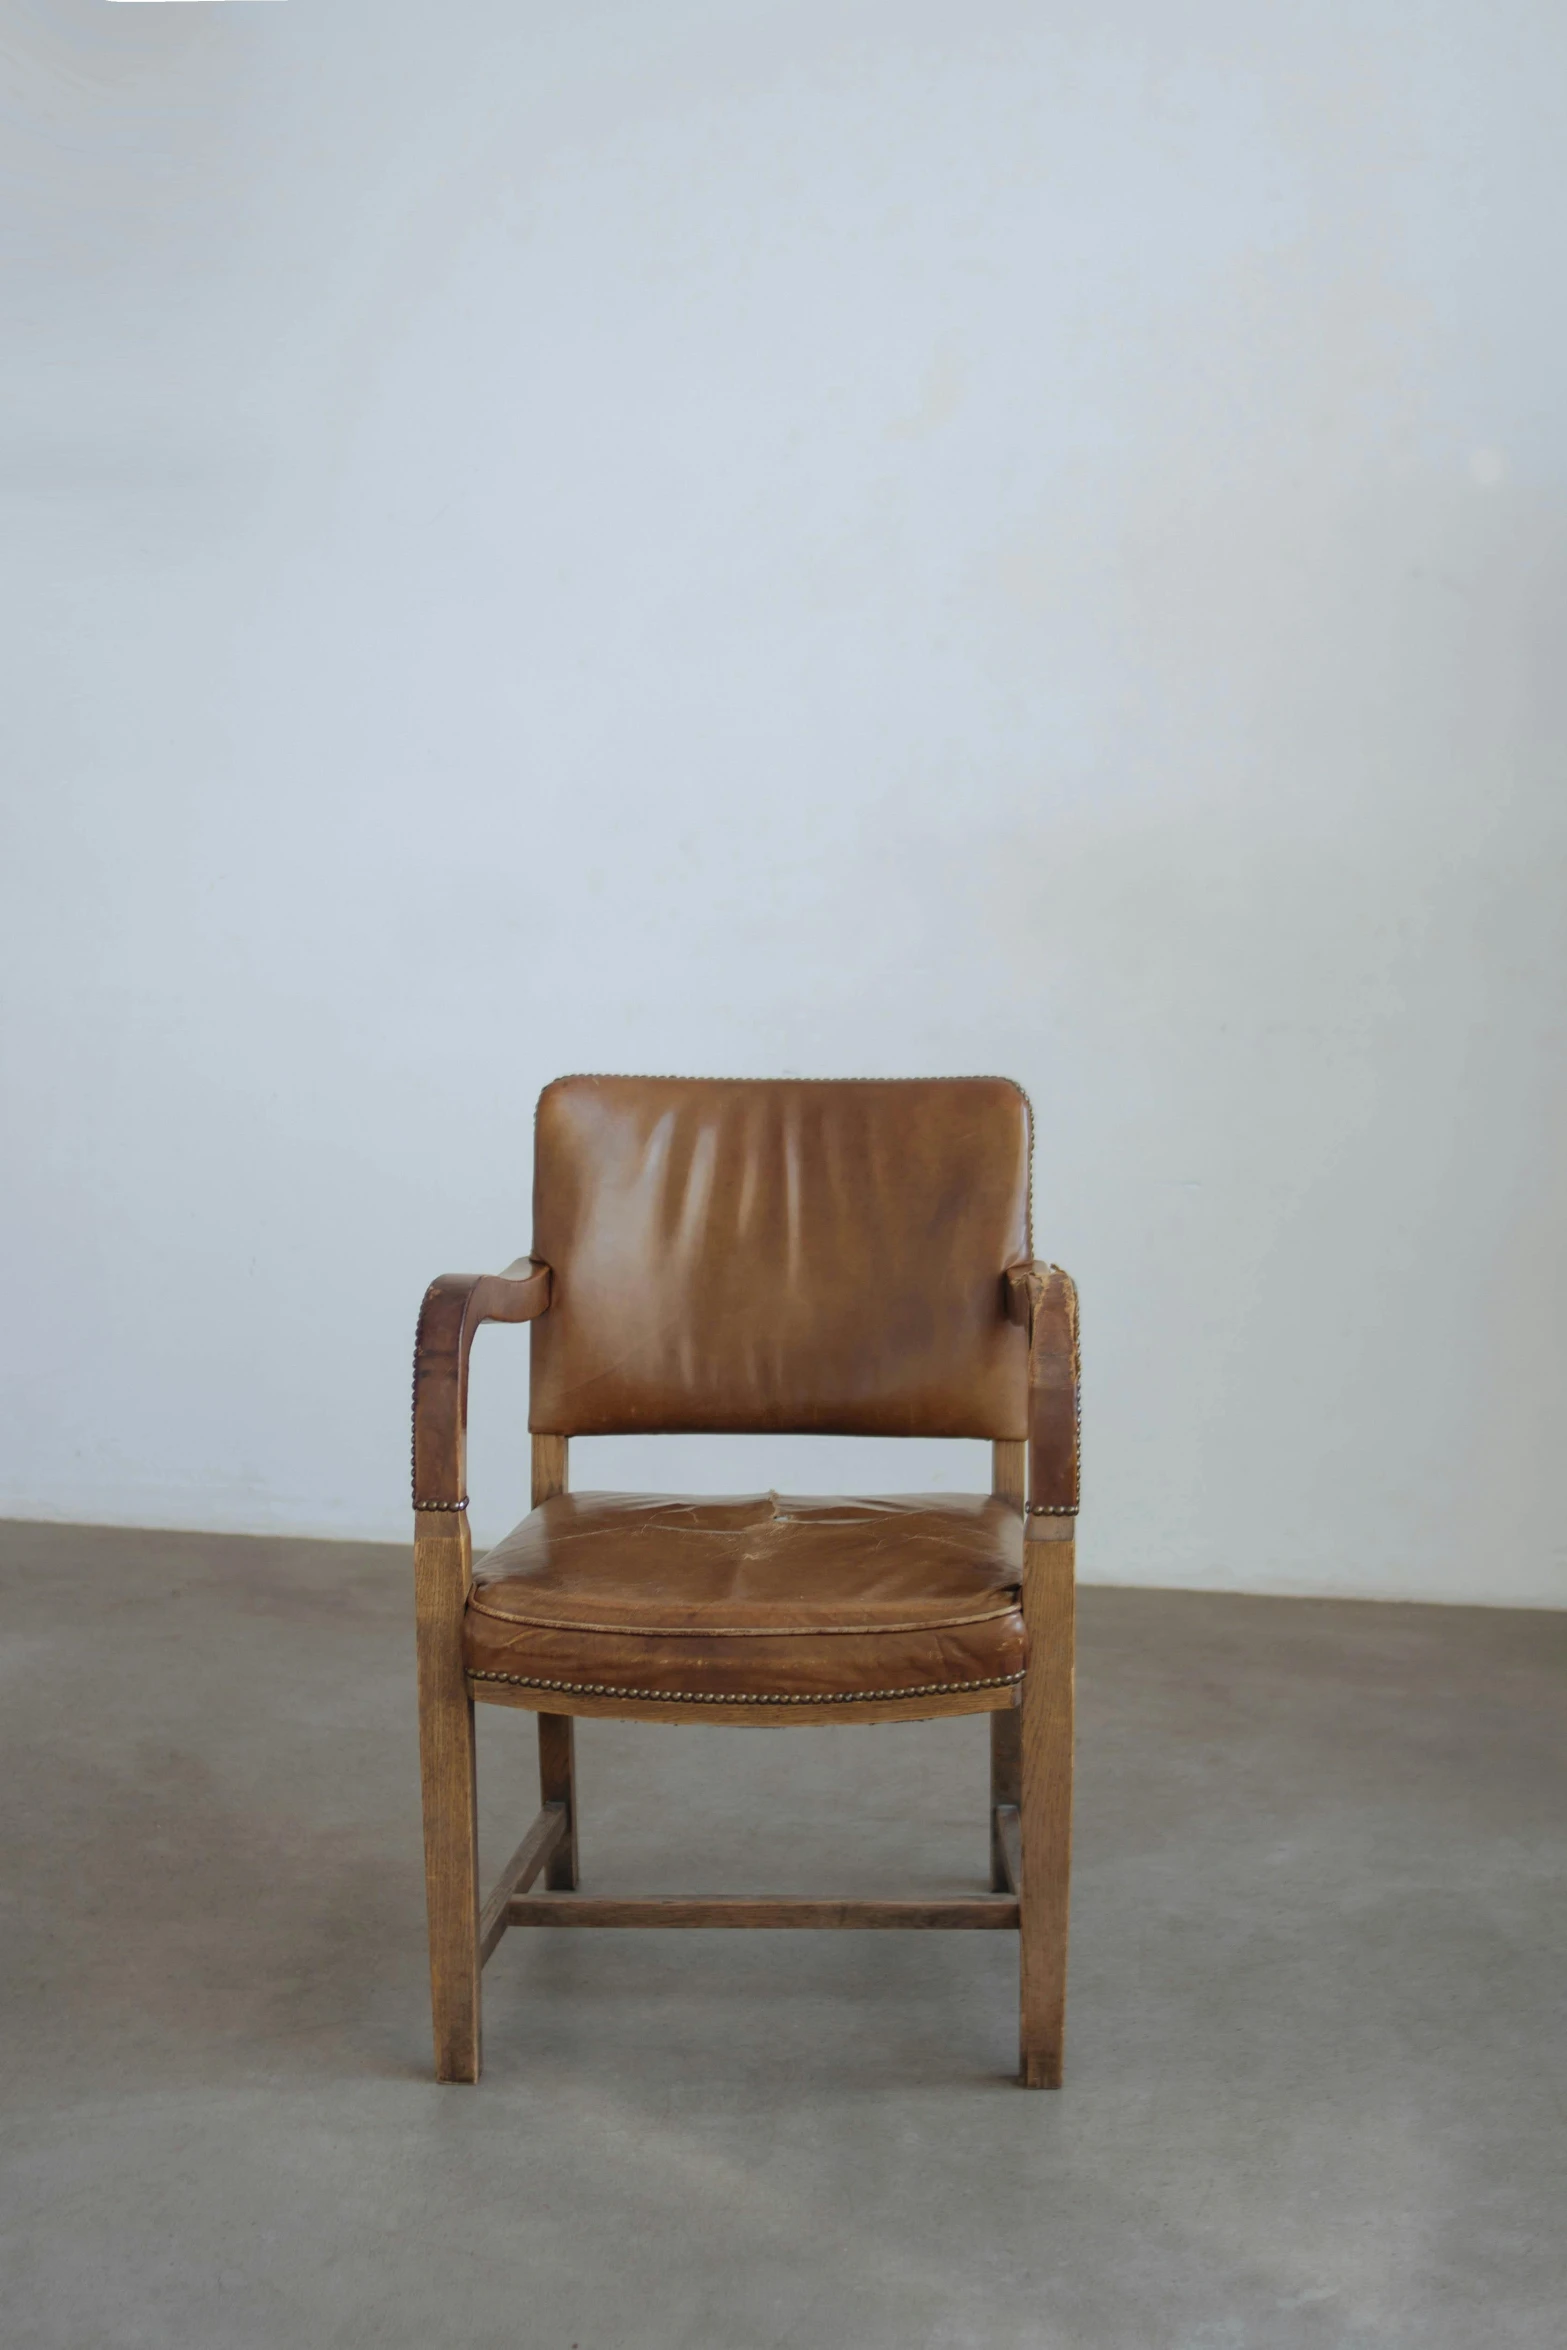 a brown leather chair against a plain white wall